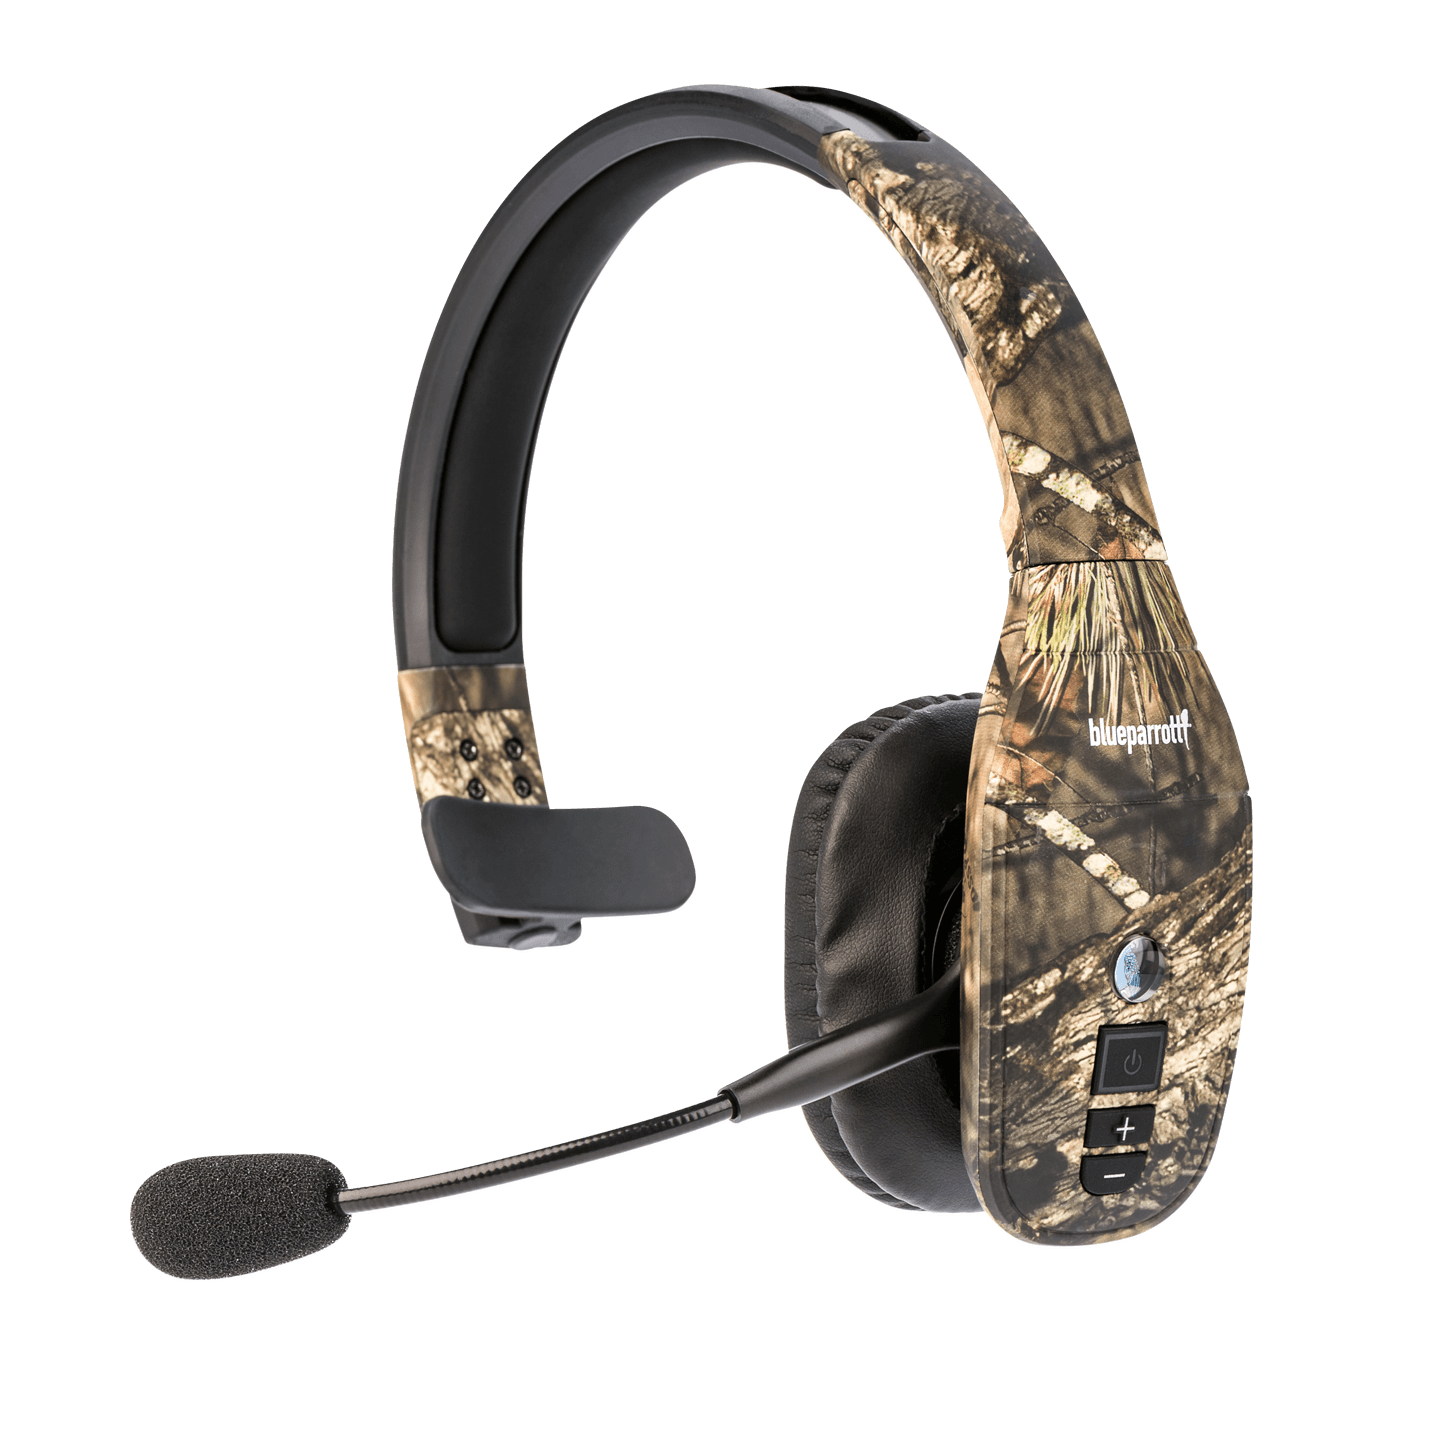 Renewed BlueParrott B450-XT Noise Canceling Mircophone Headset 